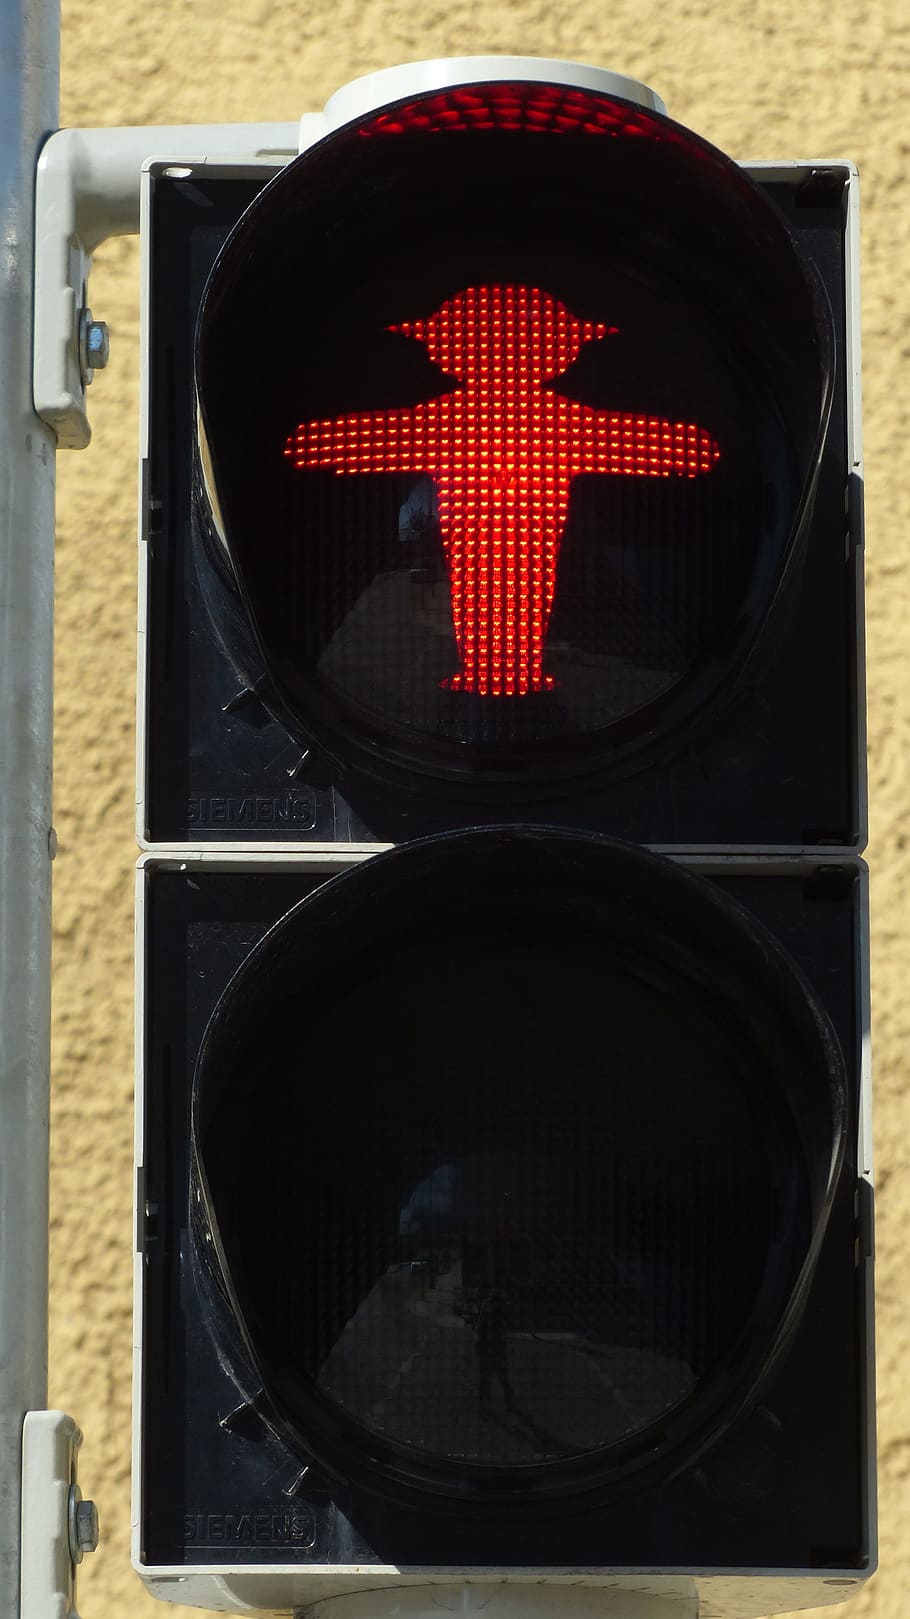 Lampu Lalu Lintas, Jembatan, pria hijau kecil, sinyal lalu lintas, merah, laki-laki, sinyal lampu, pejantan roda gigi, tanda jalan, jalan